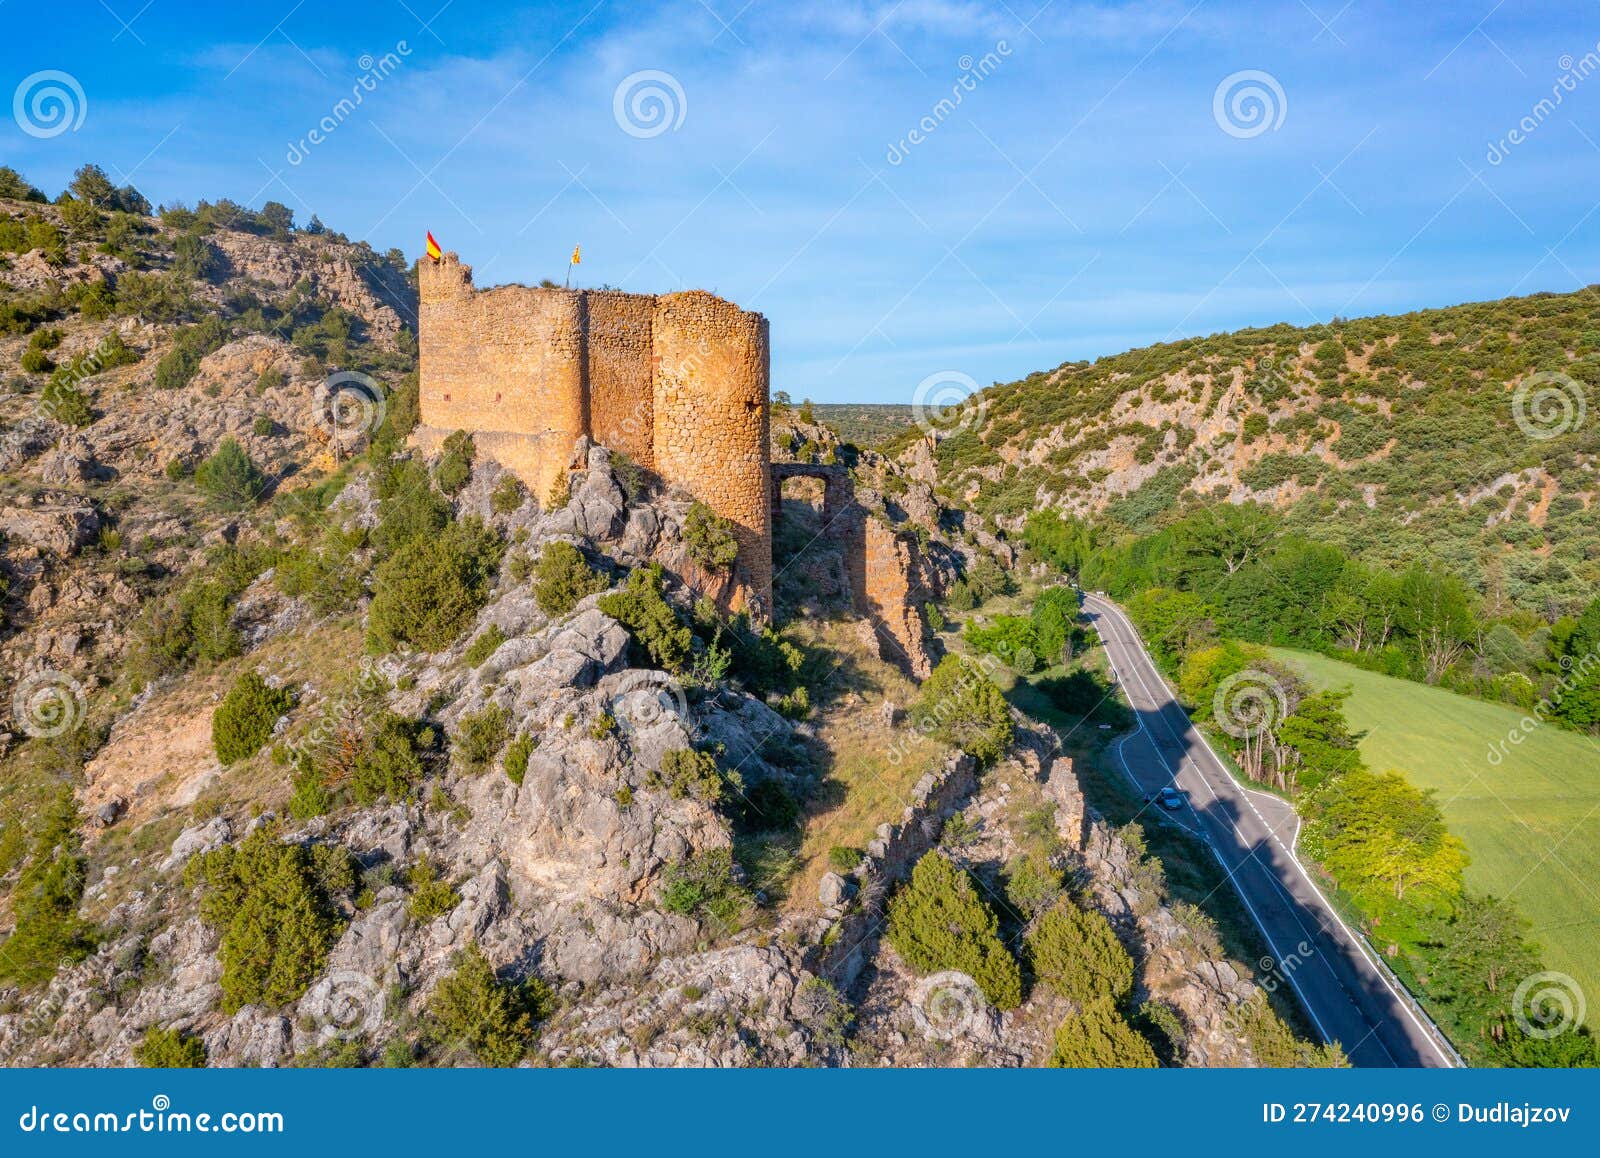 castillo de santa croche near albarracin in spain